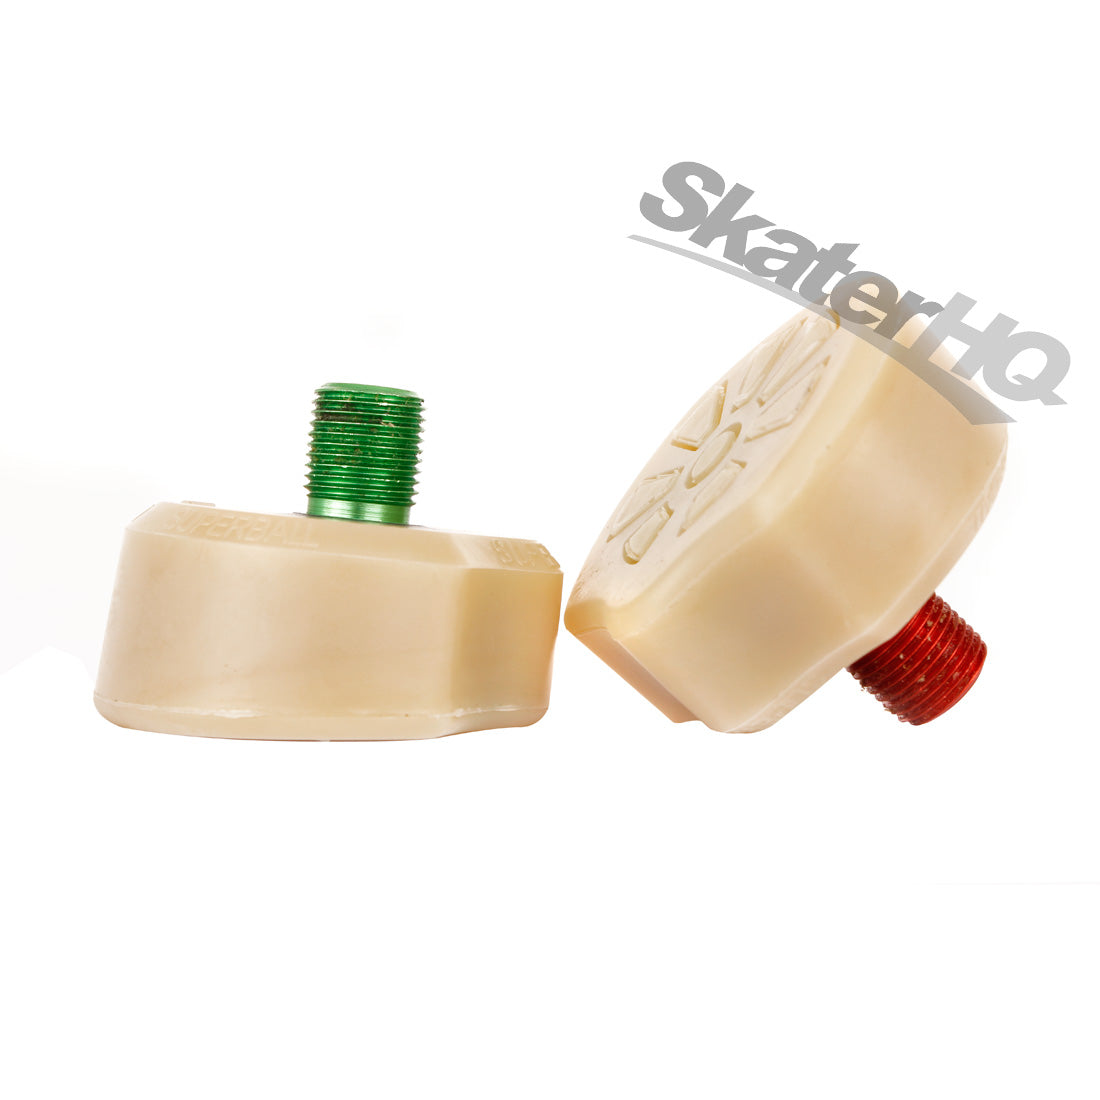 Gumball Superball Toe Stops - Short Stem - Natural Roller Skate Hardware and Parts